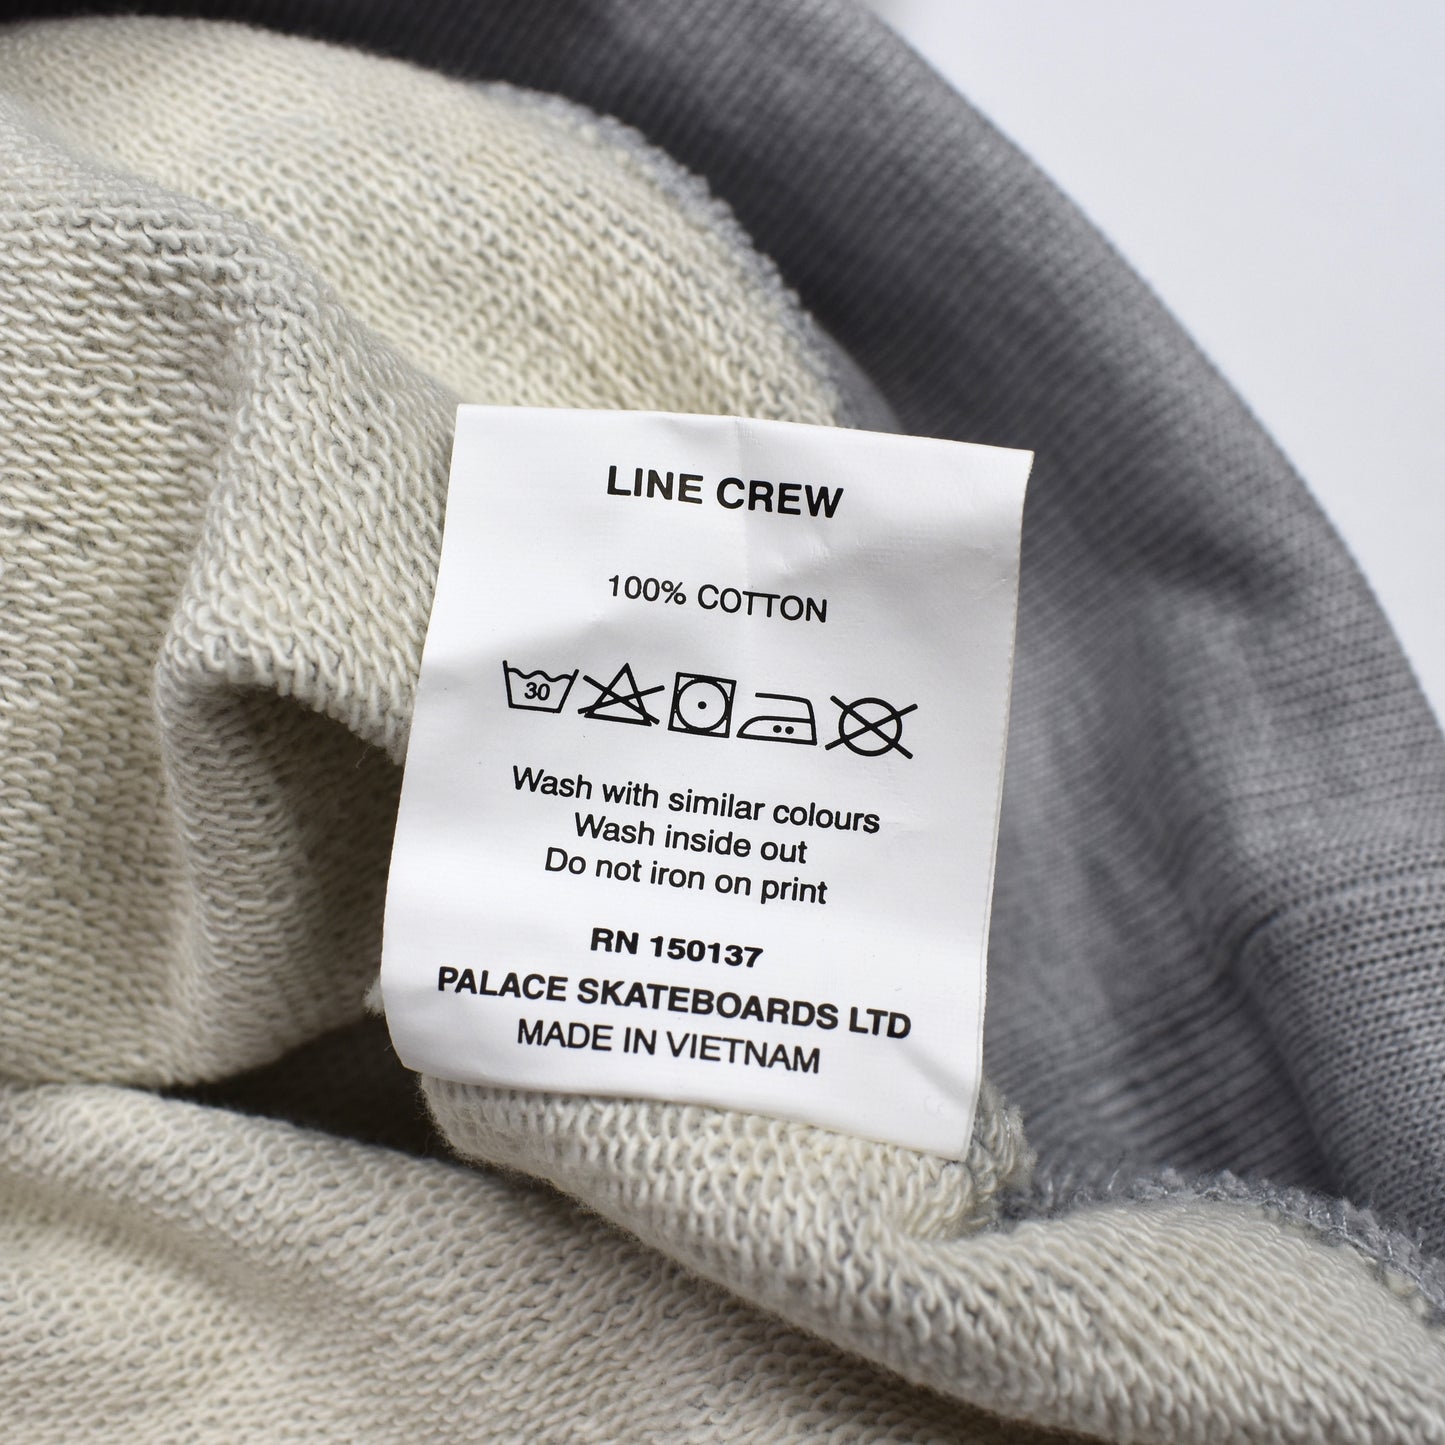 Palace - Gray Line Logo Sweatshirt